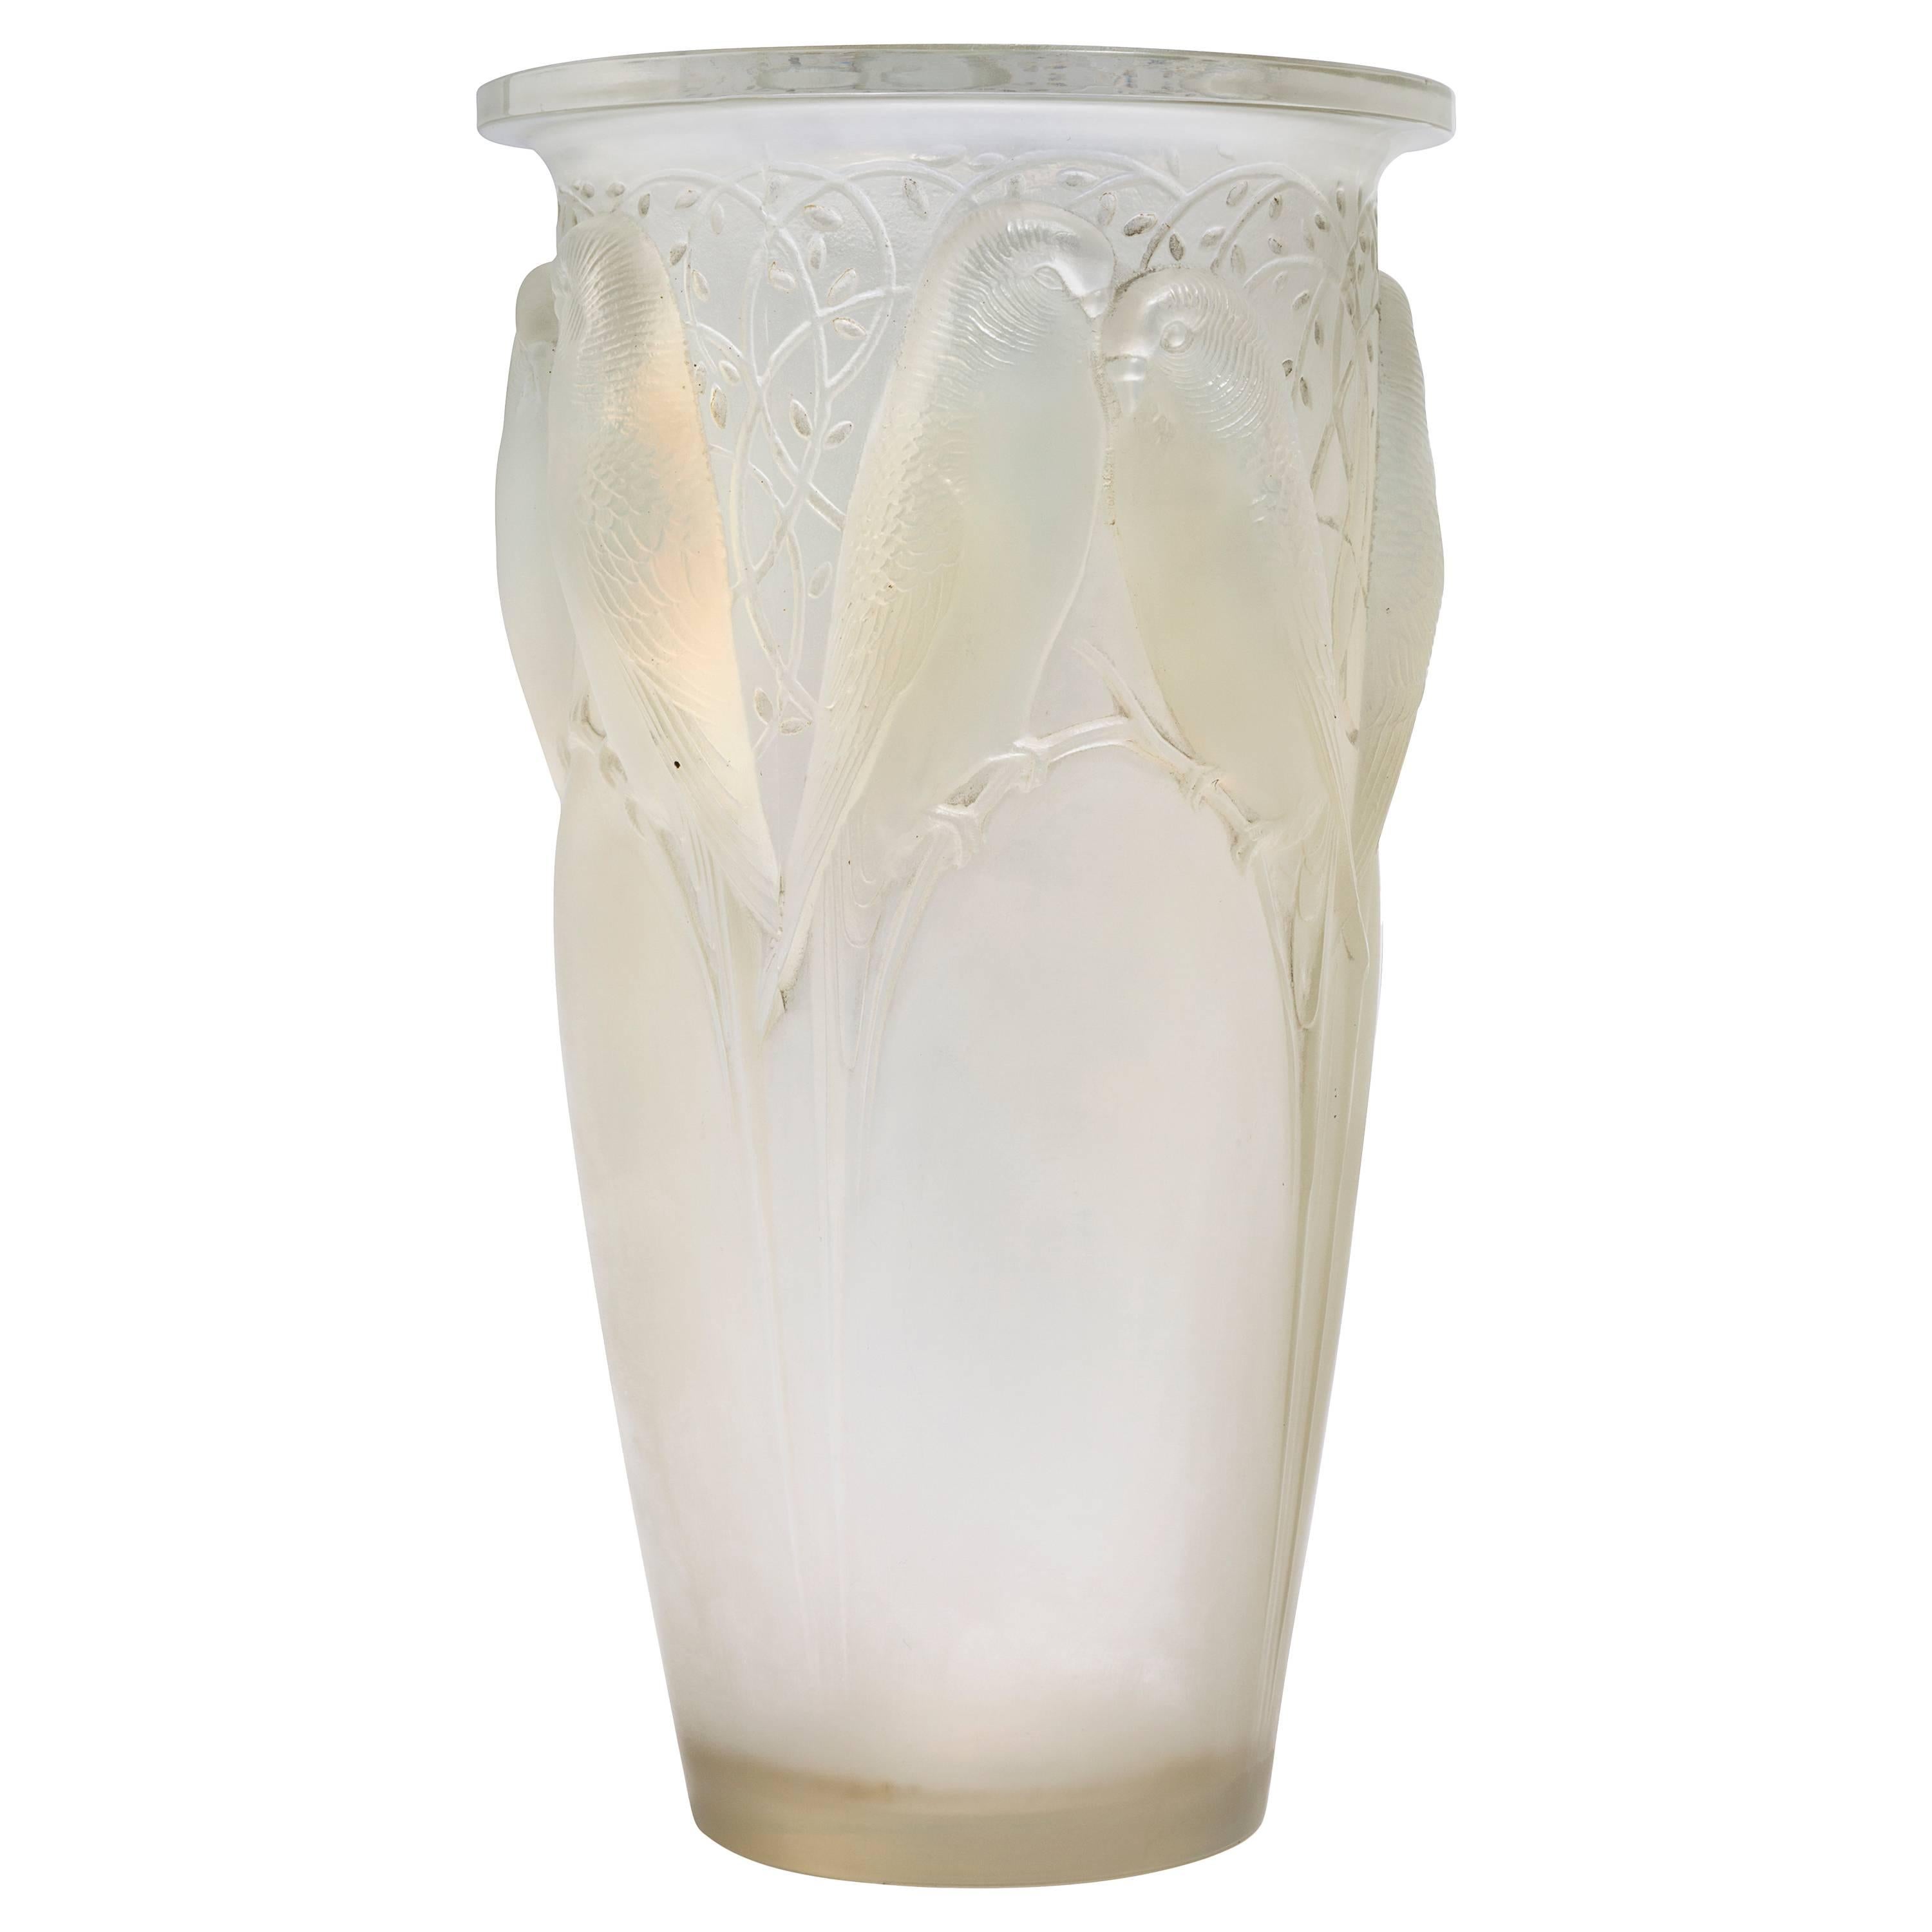 Rene Lalique (1860-1945).
Vase 